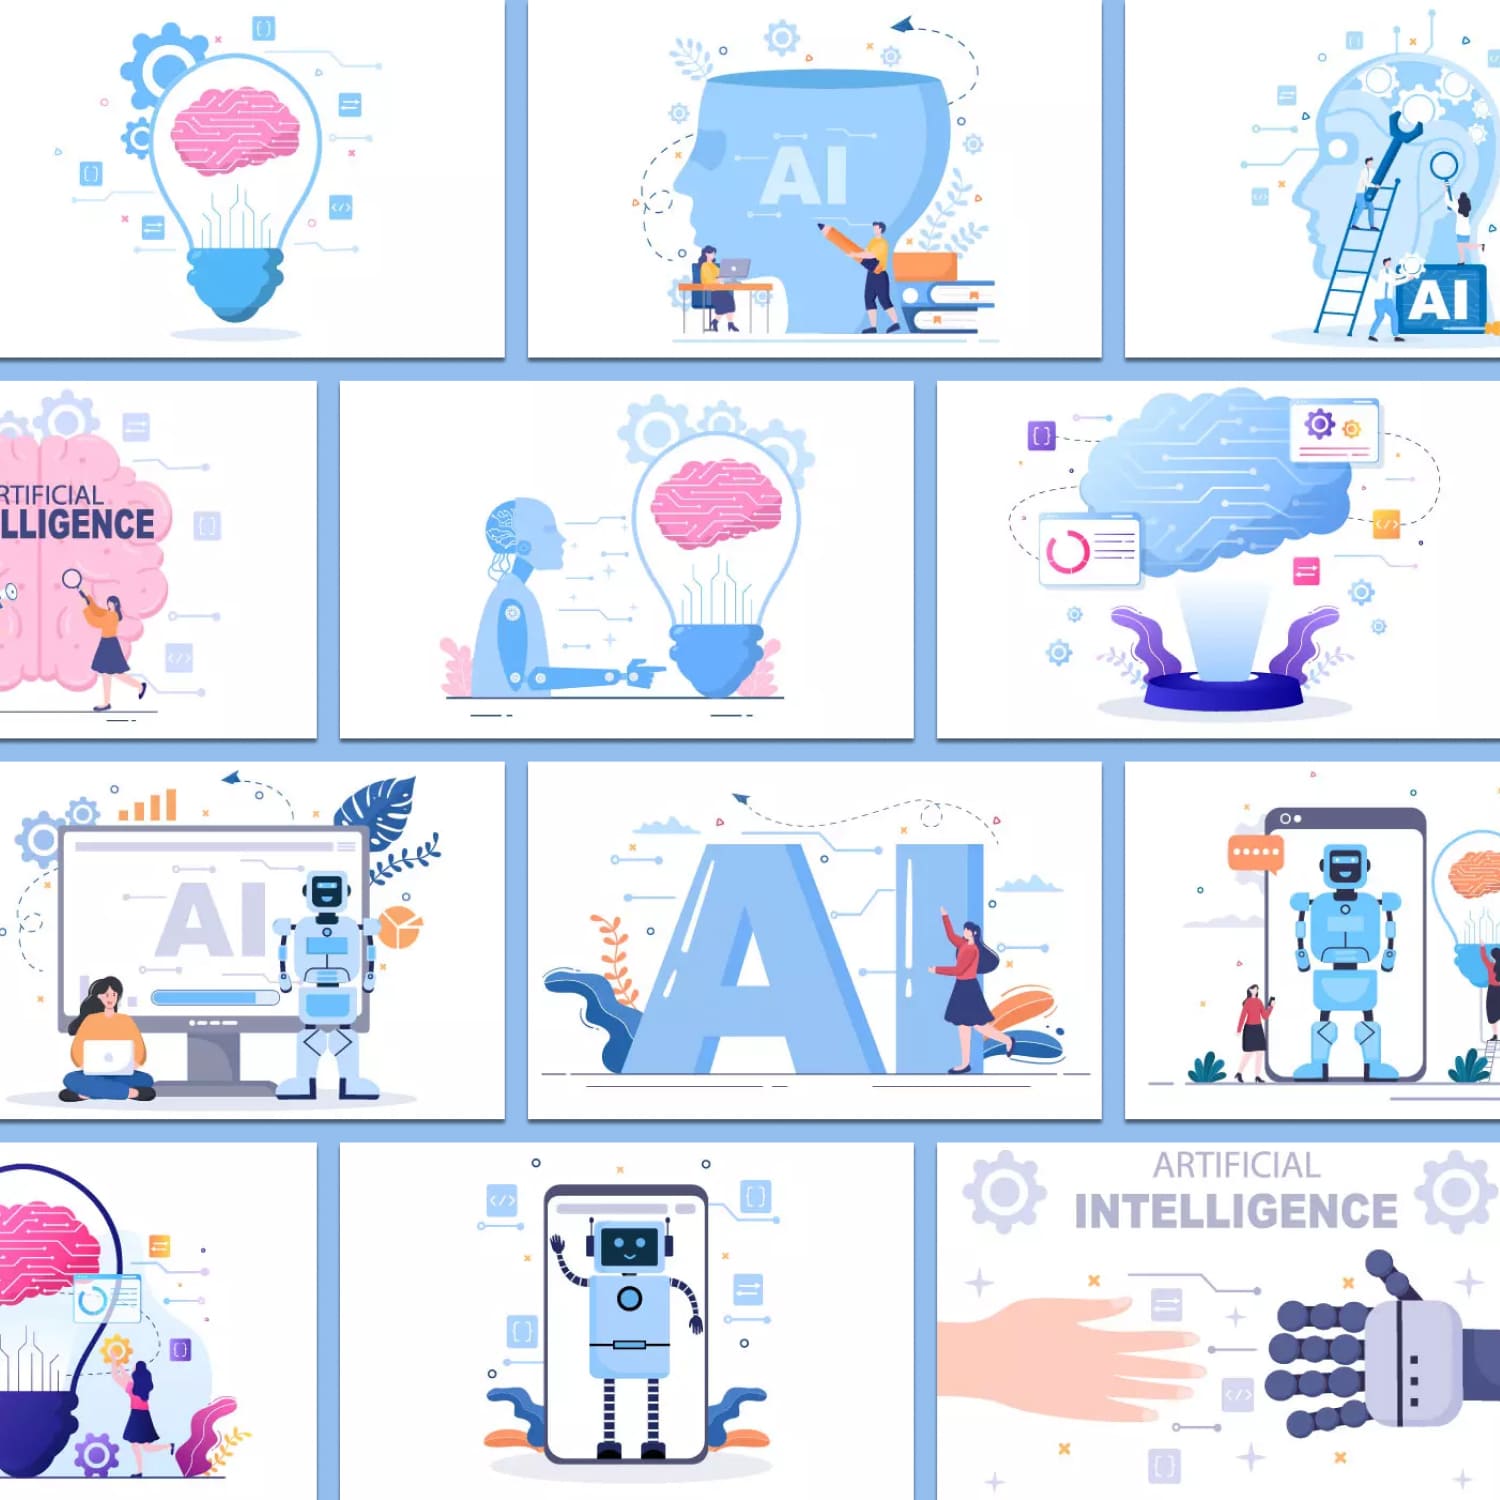 Artificial Intelligence Digital Brain Technology Vector Illustrations cover.